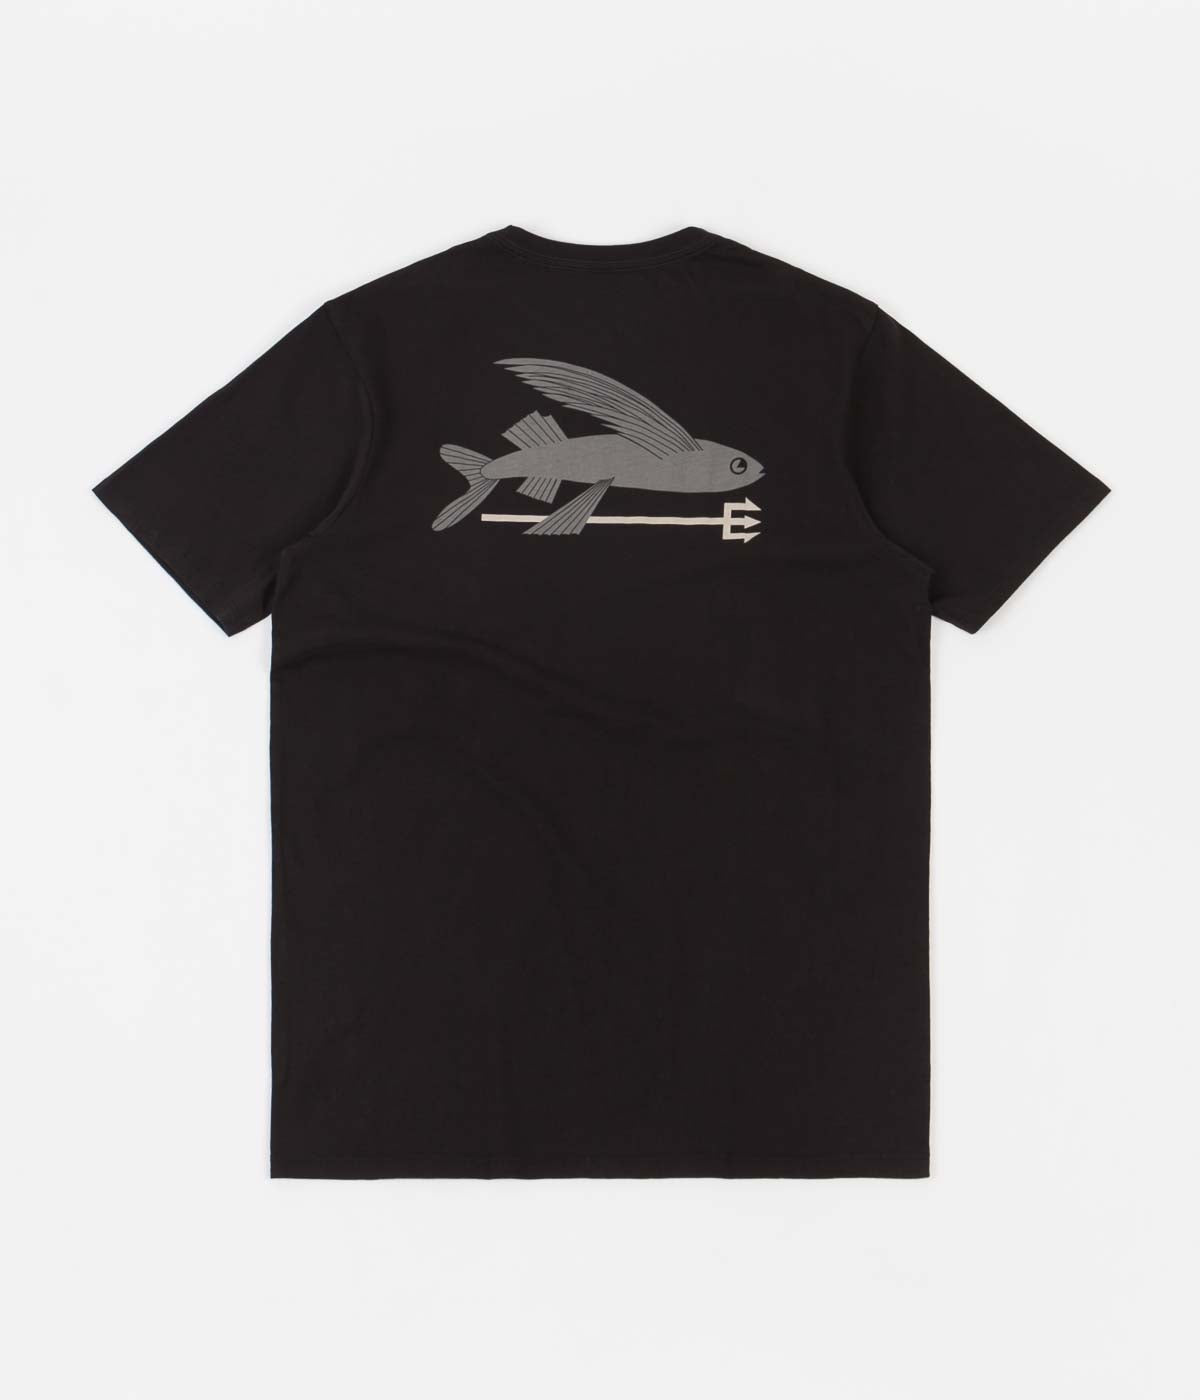 patagonia fish t shirt